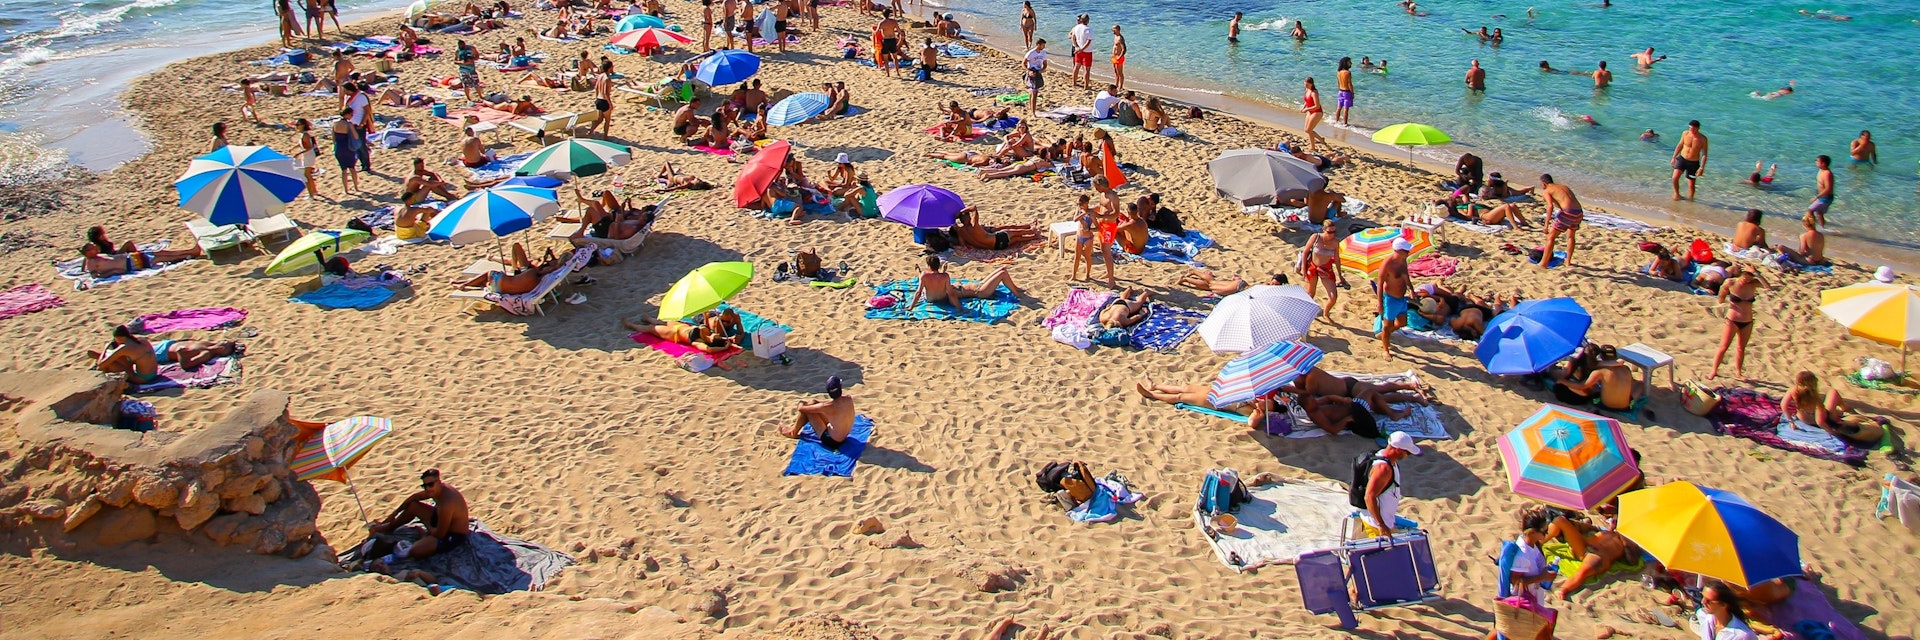 Tourists sunbathing by the Mediterranean Sea on the Platges de Comte on the northwestern coast of Ibiza.